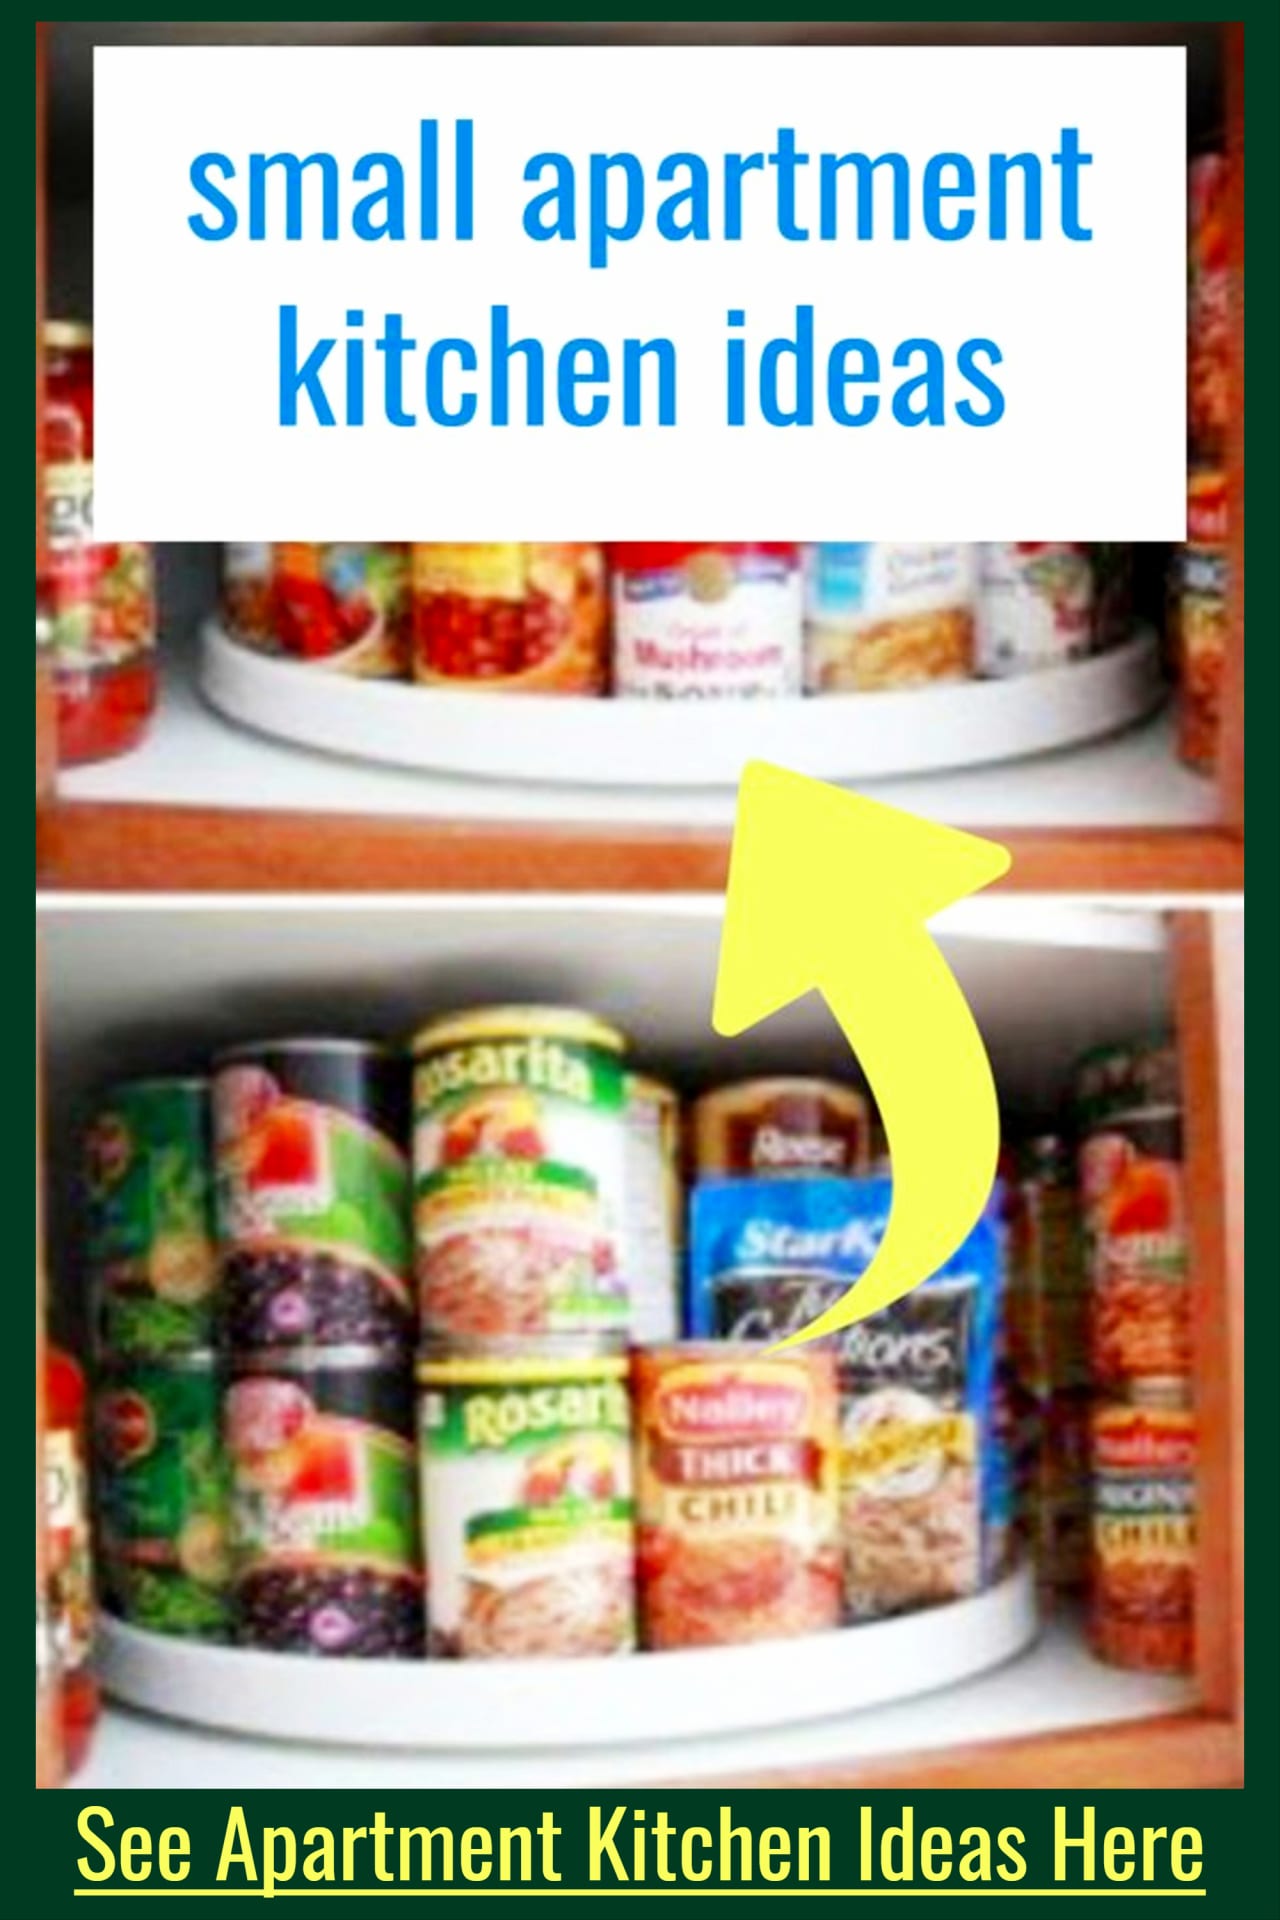 Kitchen Organization Ideas on a Budget - Small apartment kitchen dollar stores organizing ideas - life changing kitchen organization hacks